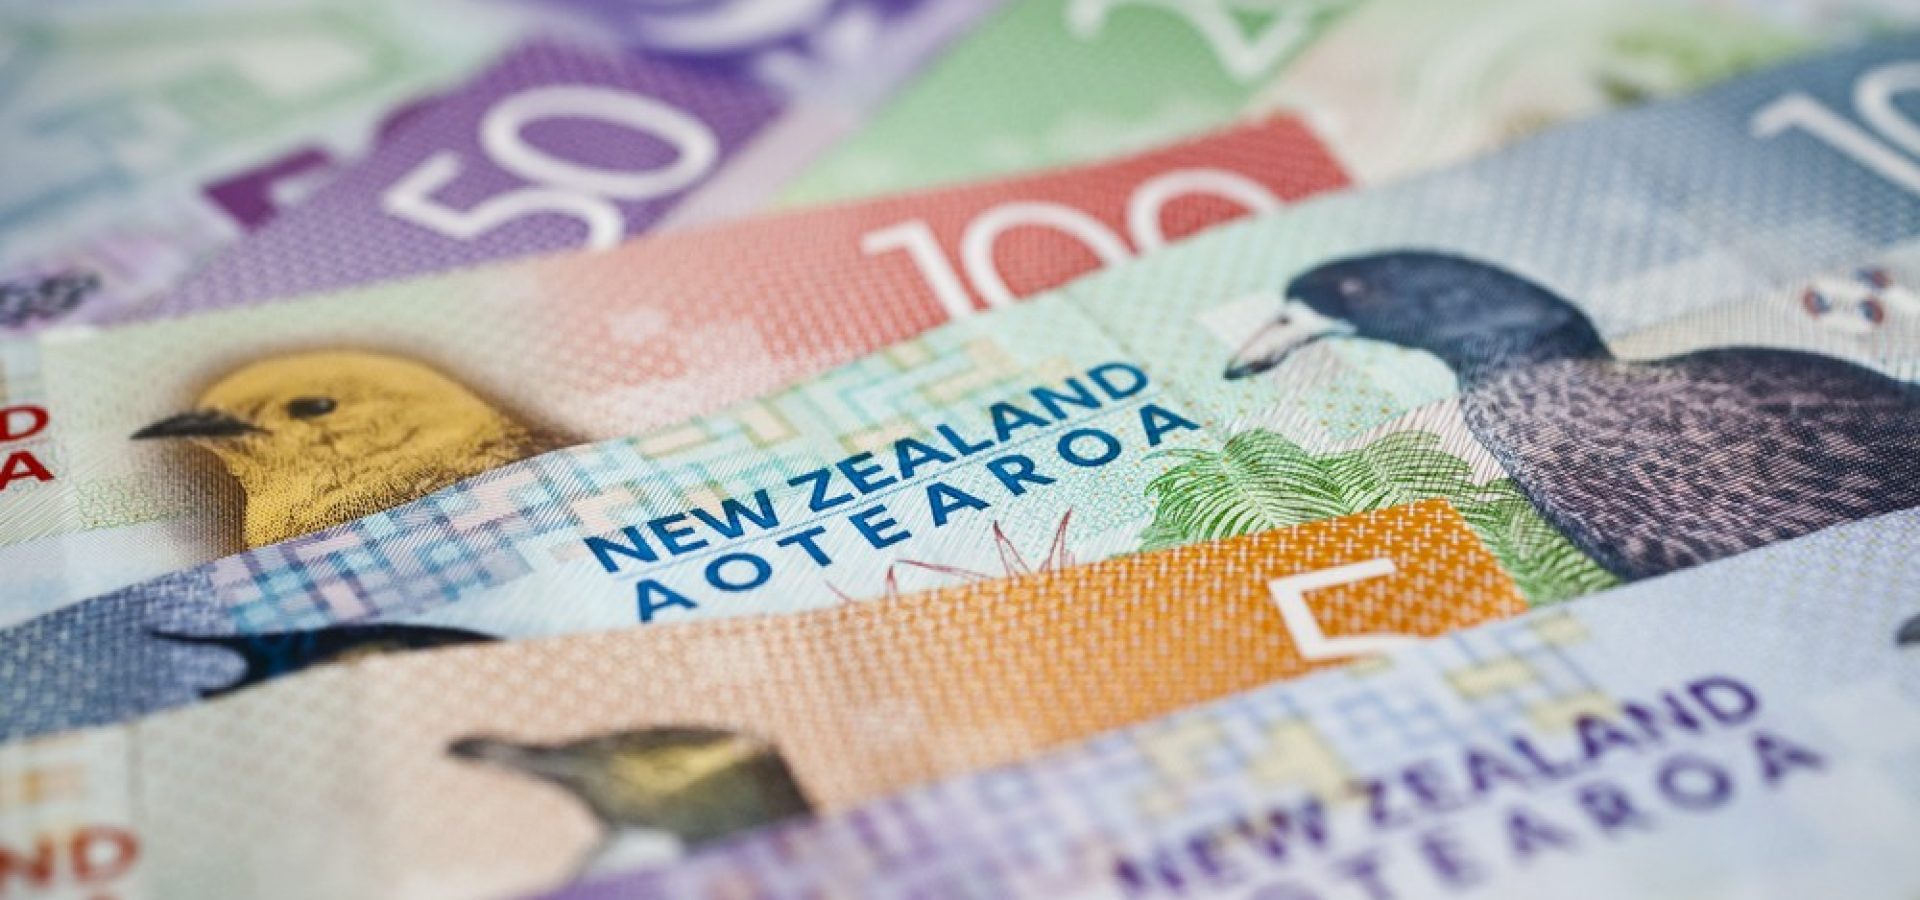 ibest – Reserve Bank of New Zealand: New Zealand dollar bills.